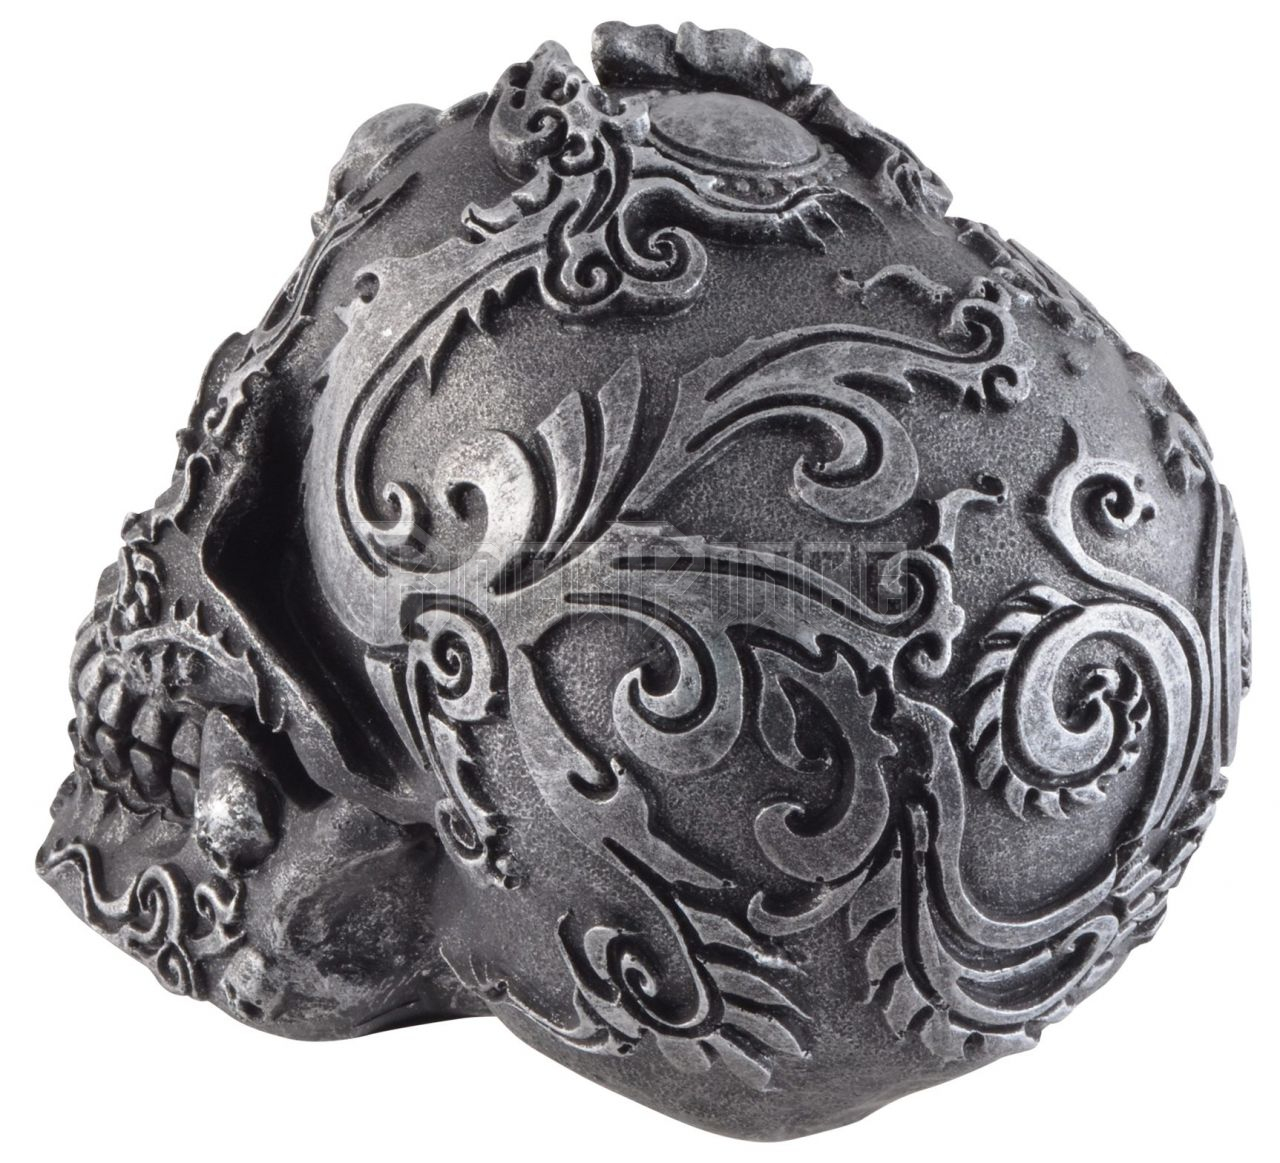 Gothic skull decorated with gothic symbols - 766-7943